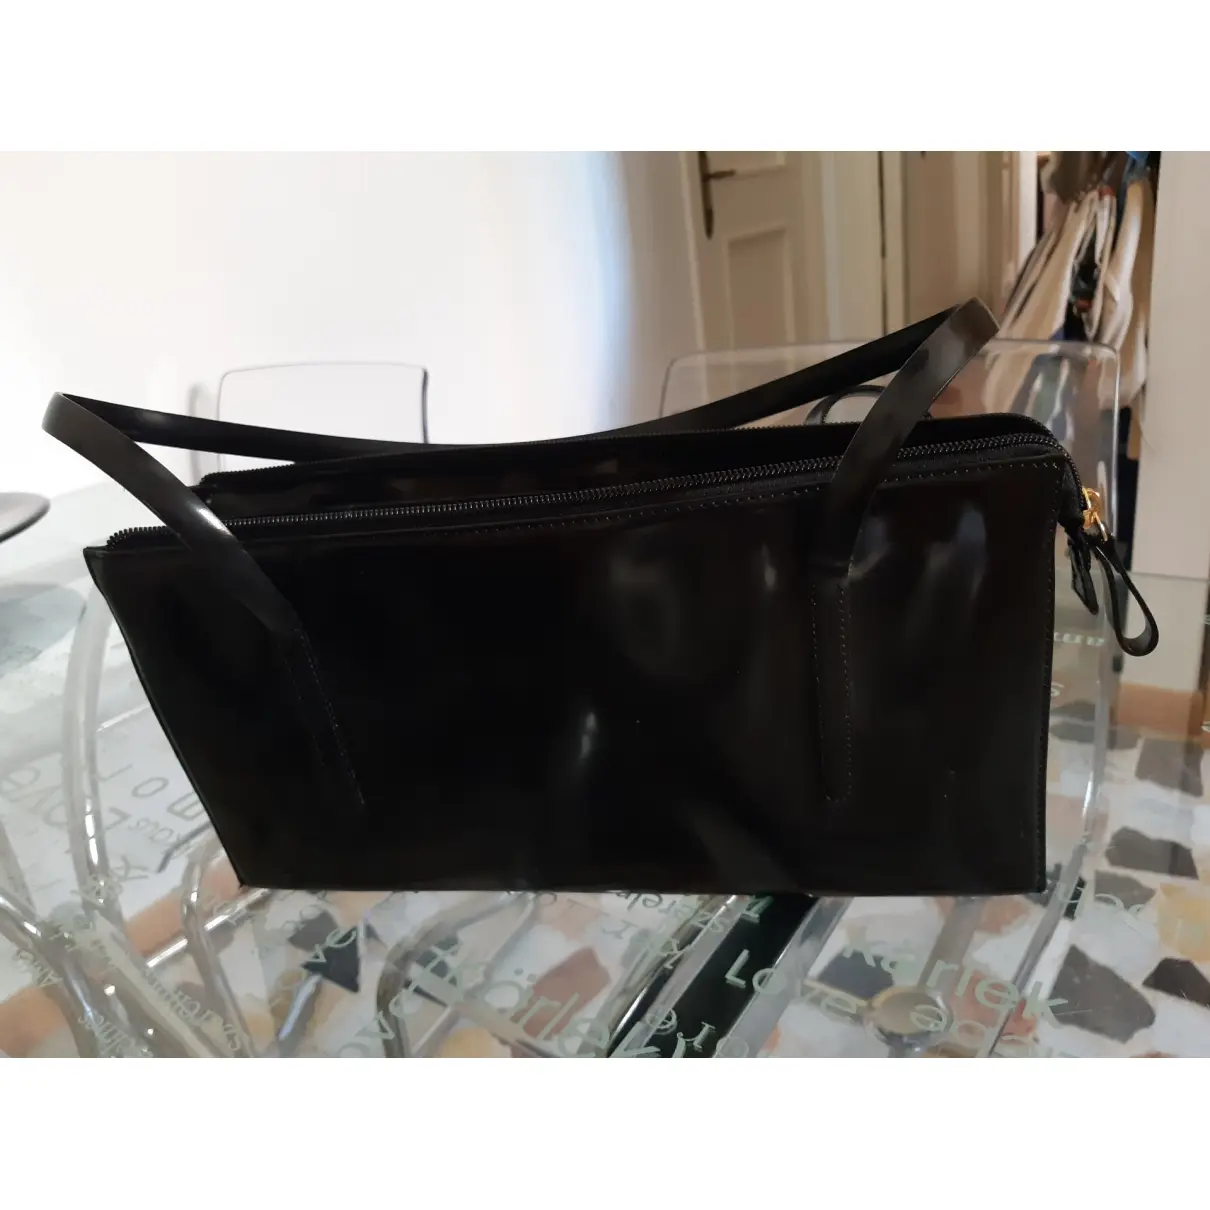 Buy Coccinelle Leather handbag online